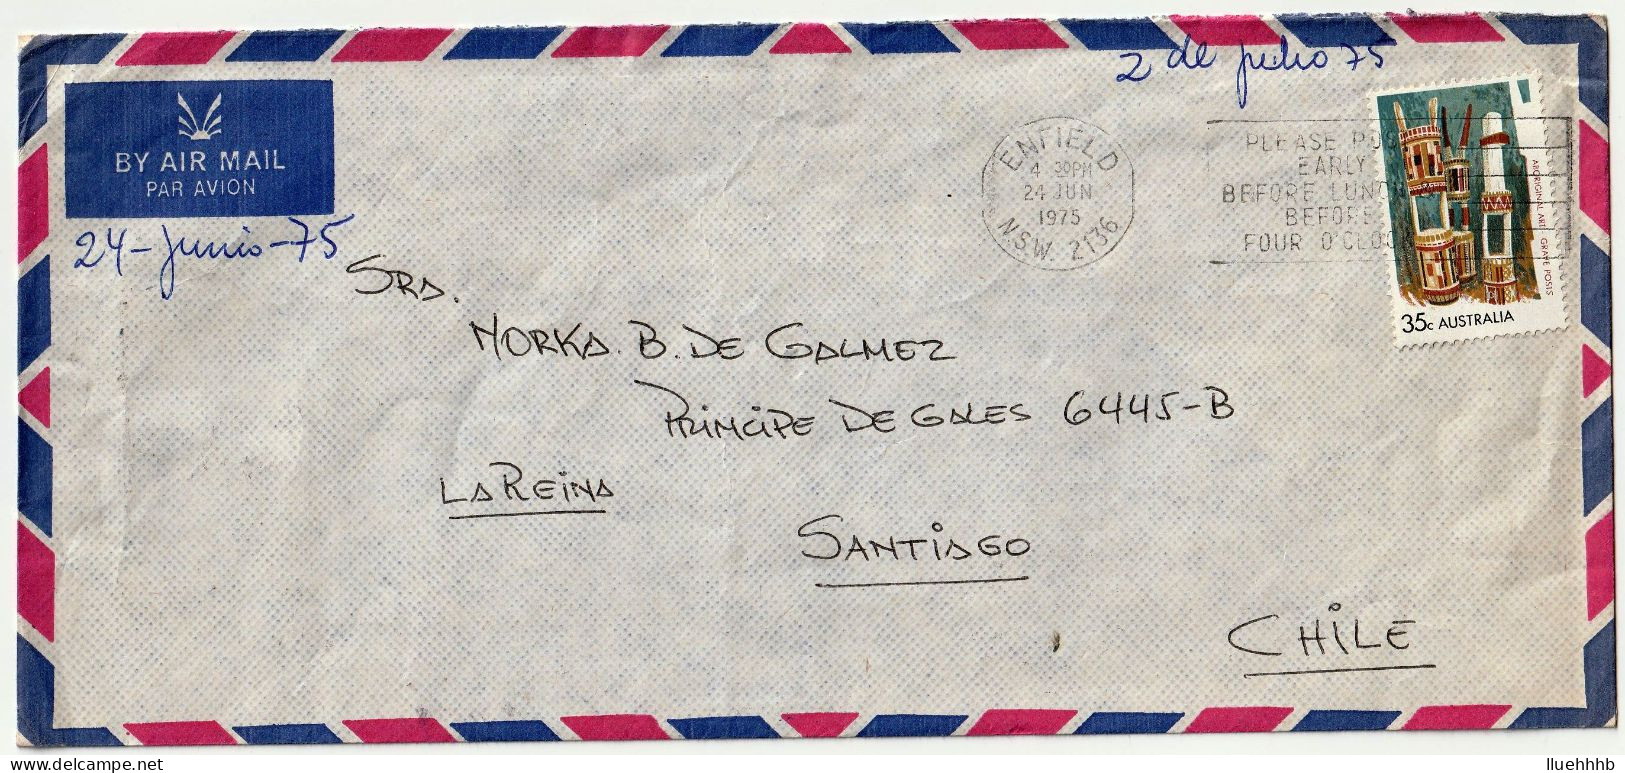 AUSTRALIA: 35c Aboriginal Art Solo Usage In 1975 Airmail Cover To CHILE - Briefe U. Dokumente